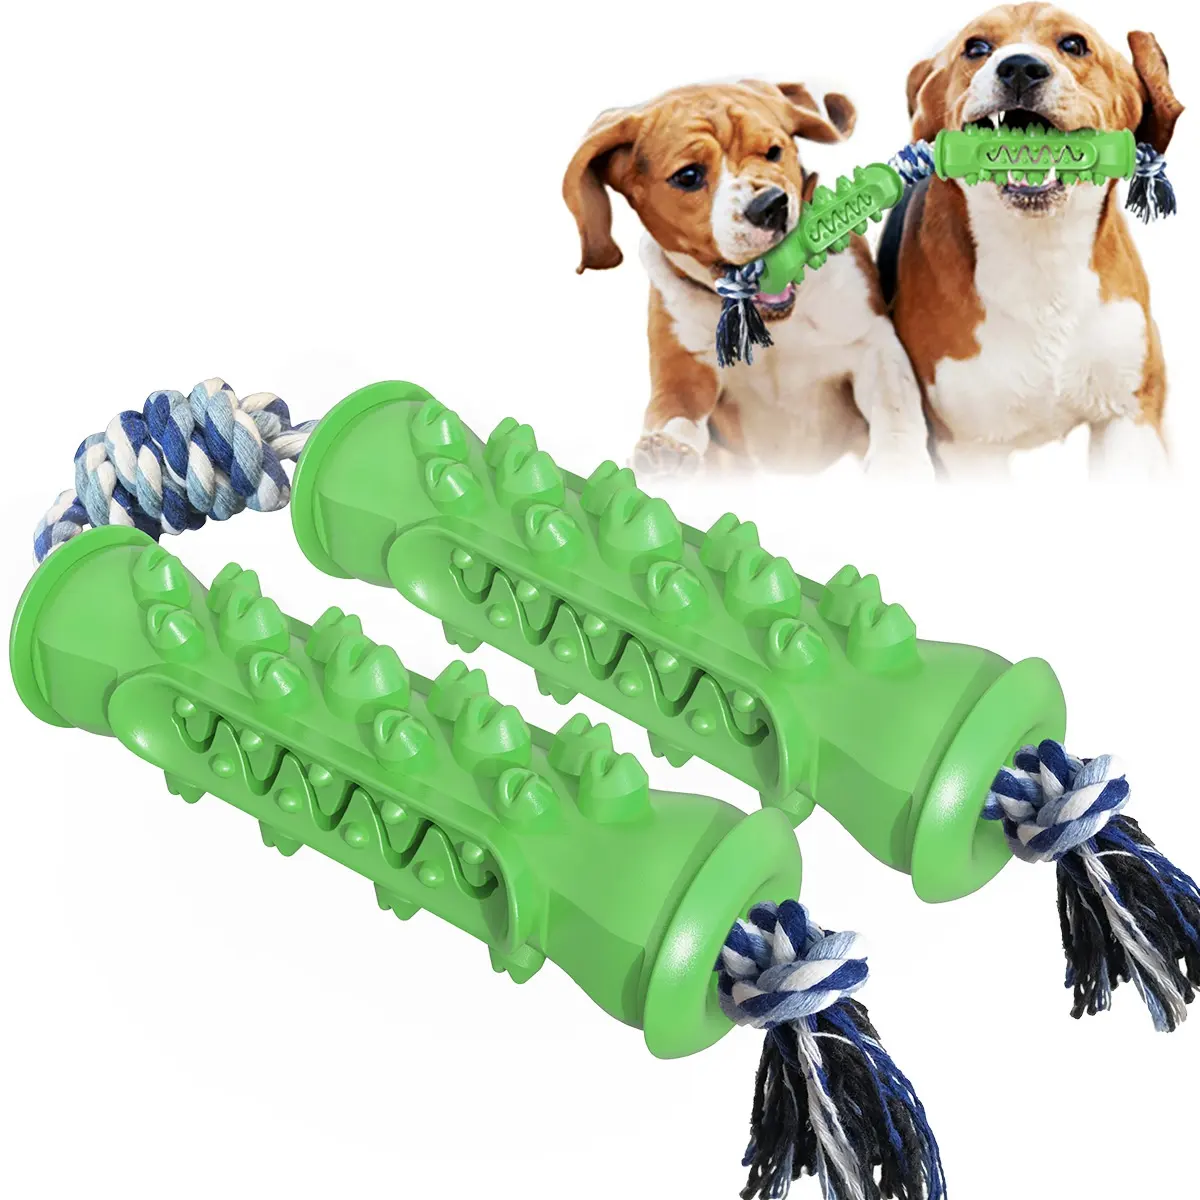 Dog toy double molar stick dog toothbrush dog bite cotton rope pet supplies 2021 Amazon hot sales